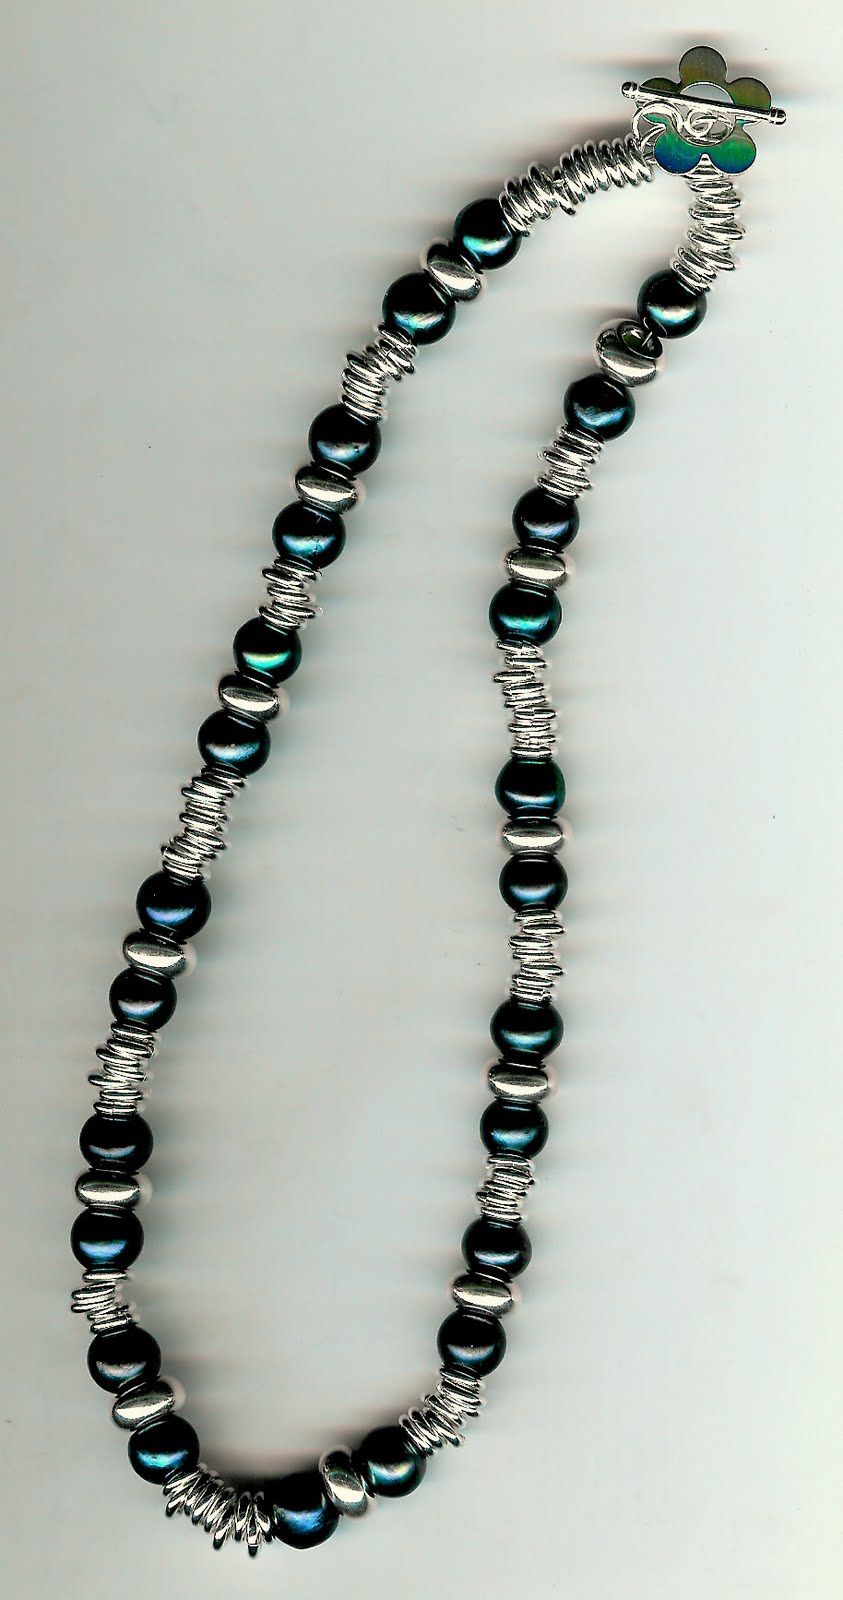 175. Akoya pearls with Sterling Silver + Earrings